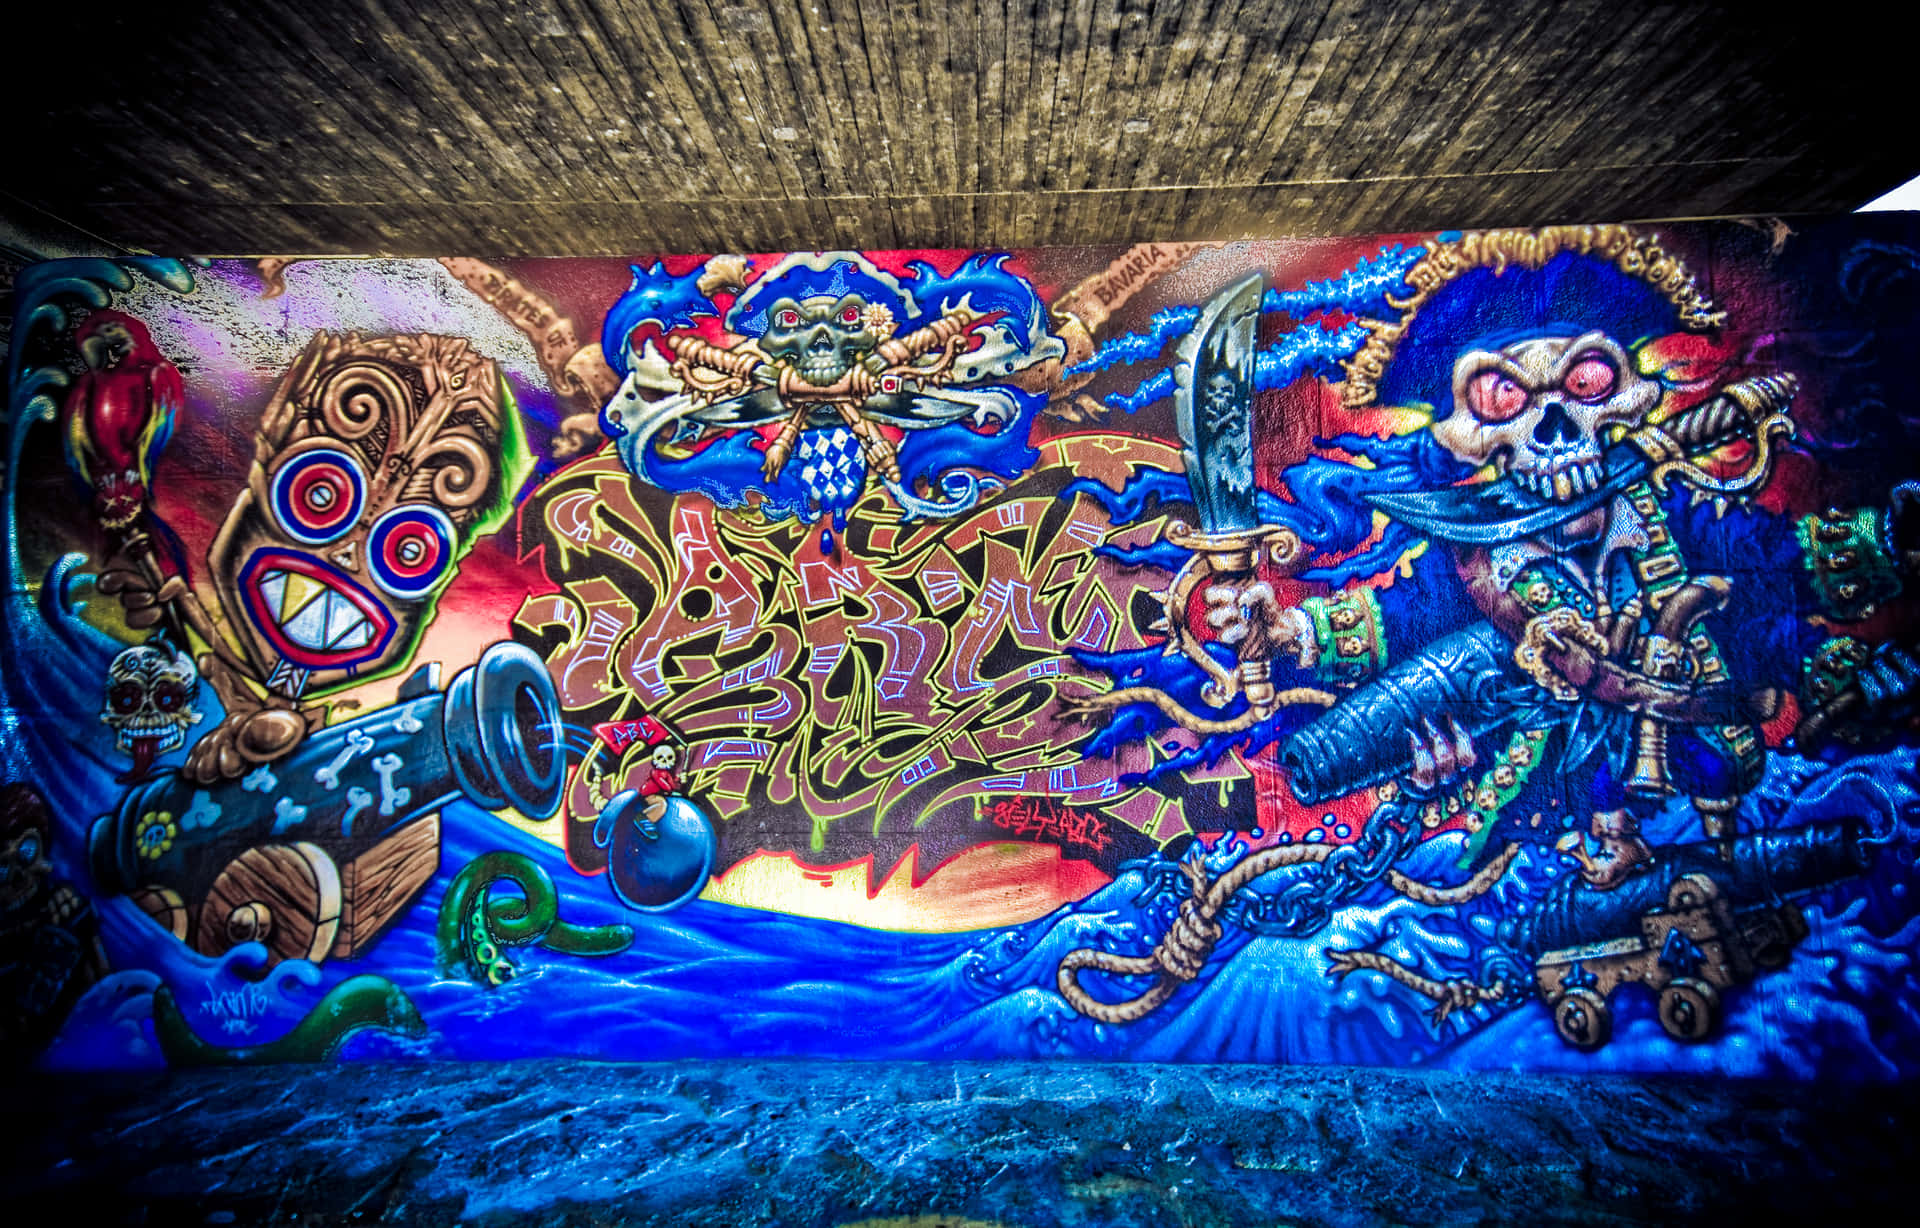 Brightly Colored Graffiti Art in an Urban Setting Wallpaper